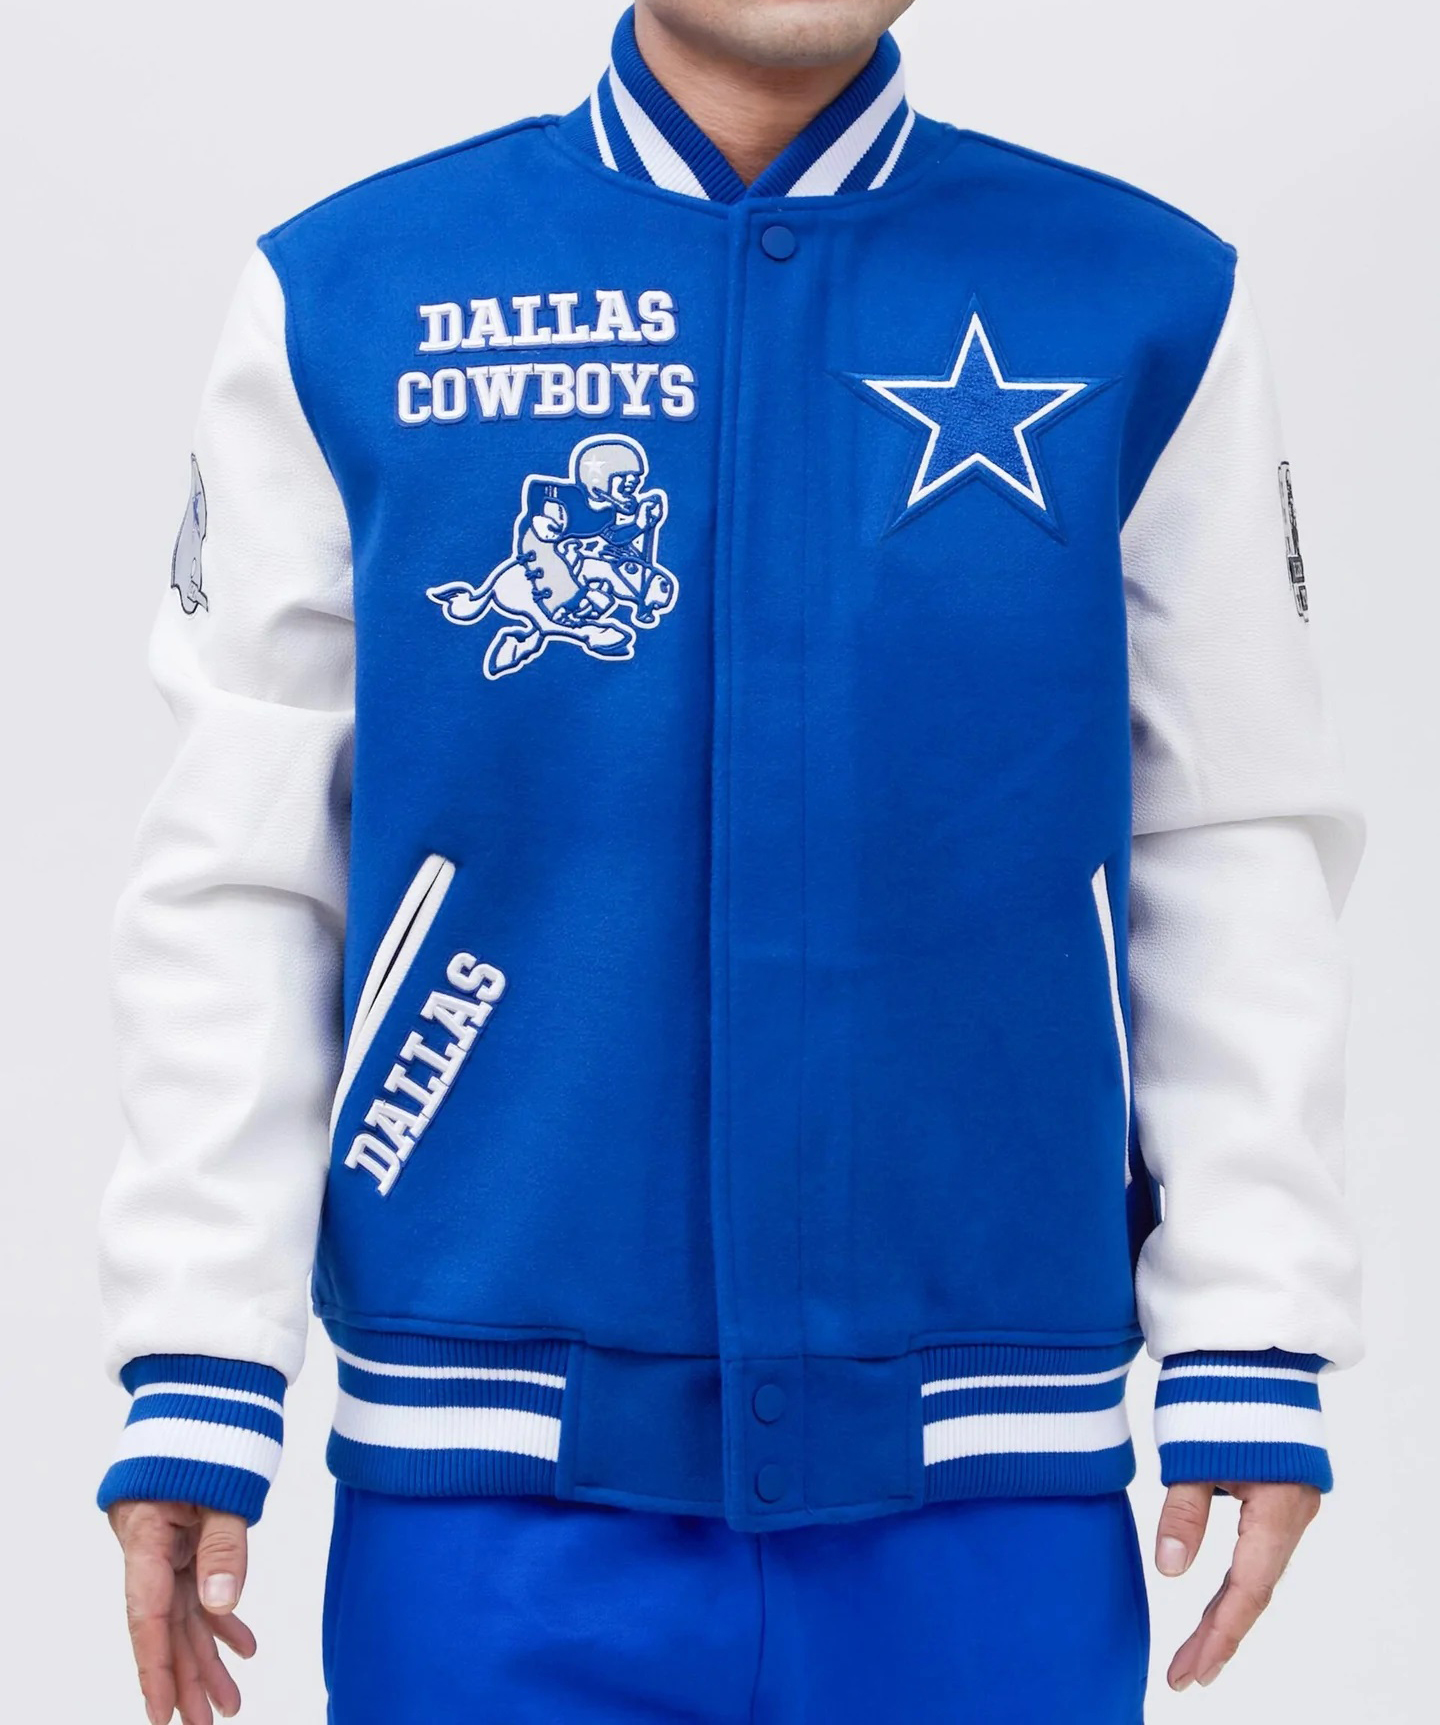 Dallas Cowboys Retro Classic Blue White Varsity Jacket - Maker of Jacket